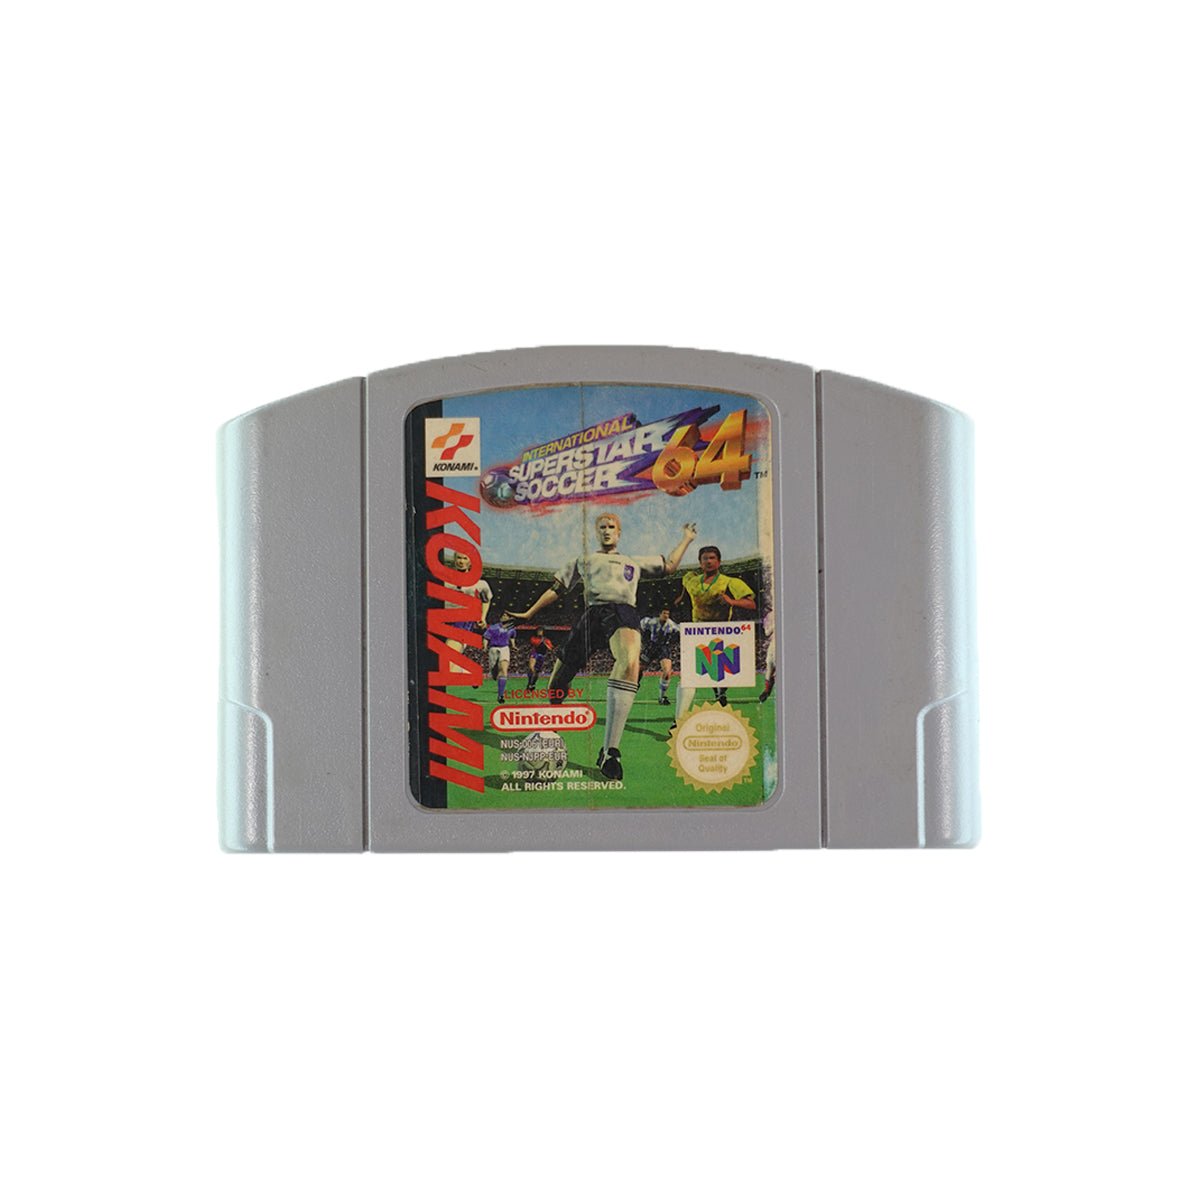 (Pre-Owned) Super Star Soccer 64 - Nintendo 64 - ريترو - Store 974 | ستور ٩٧٤